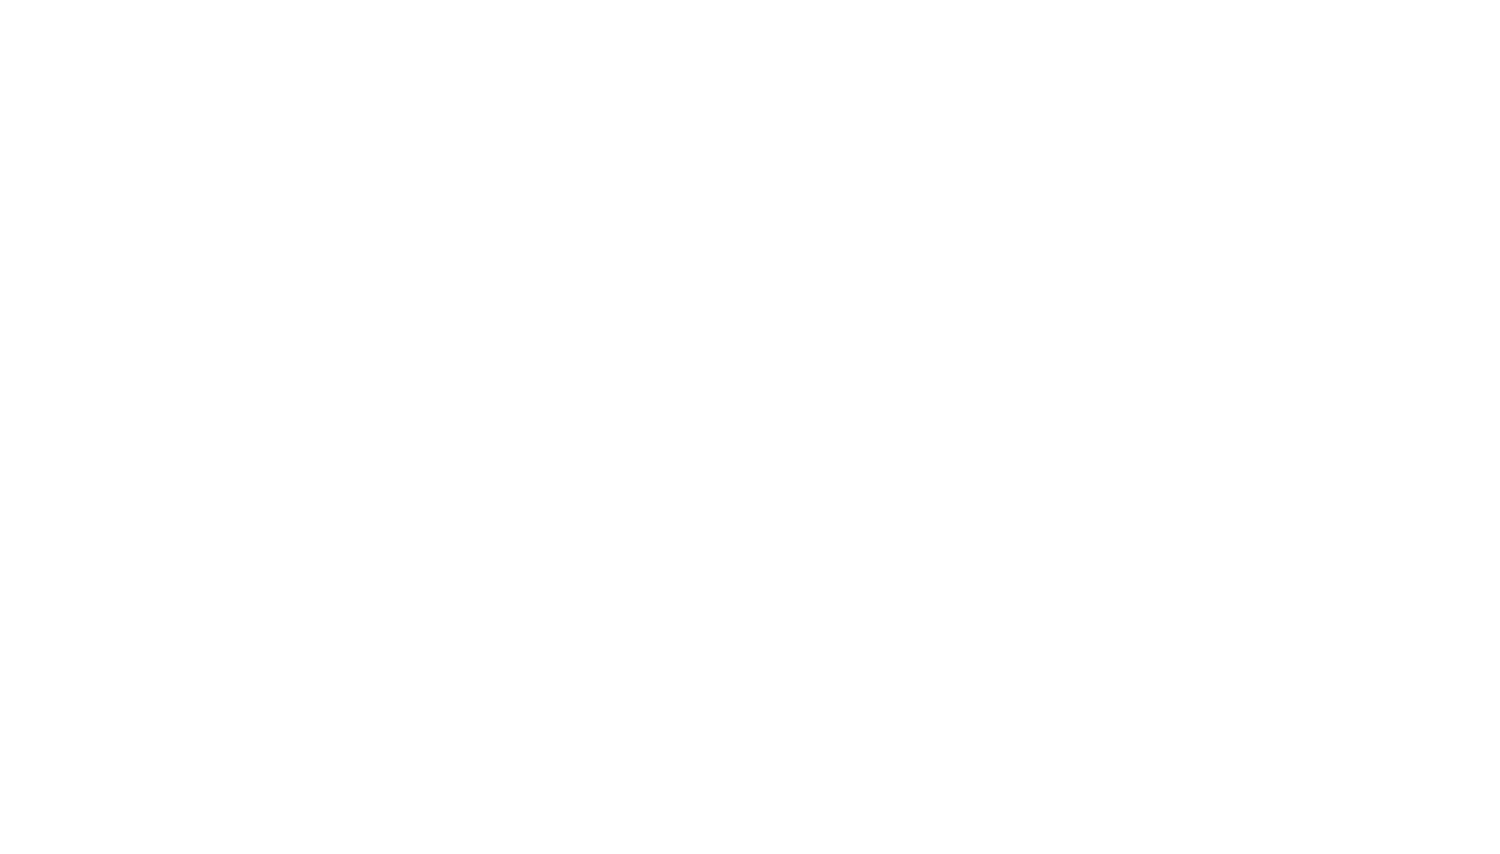 Mission Church